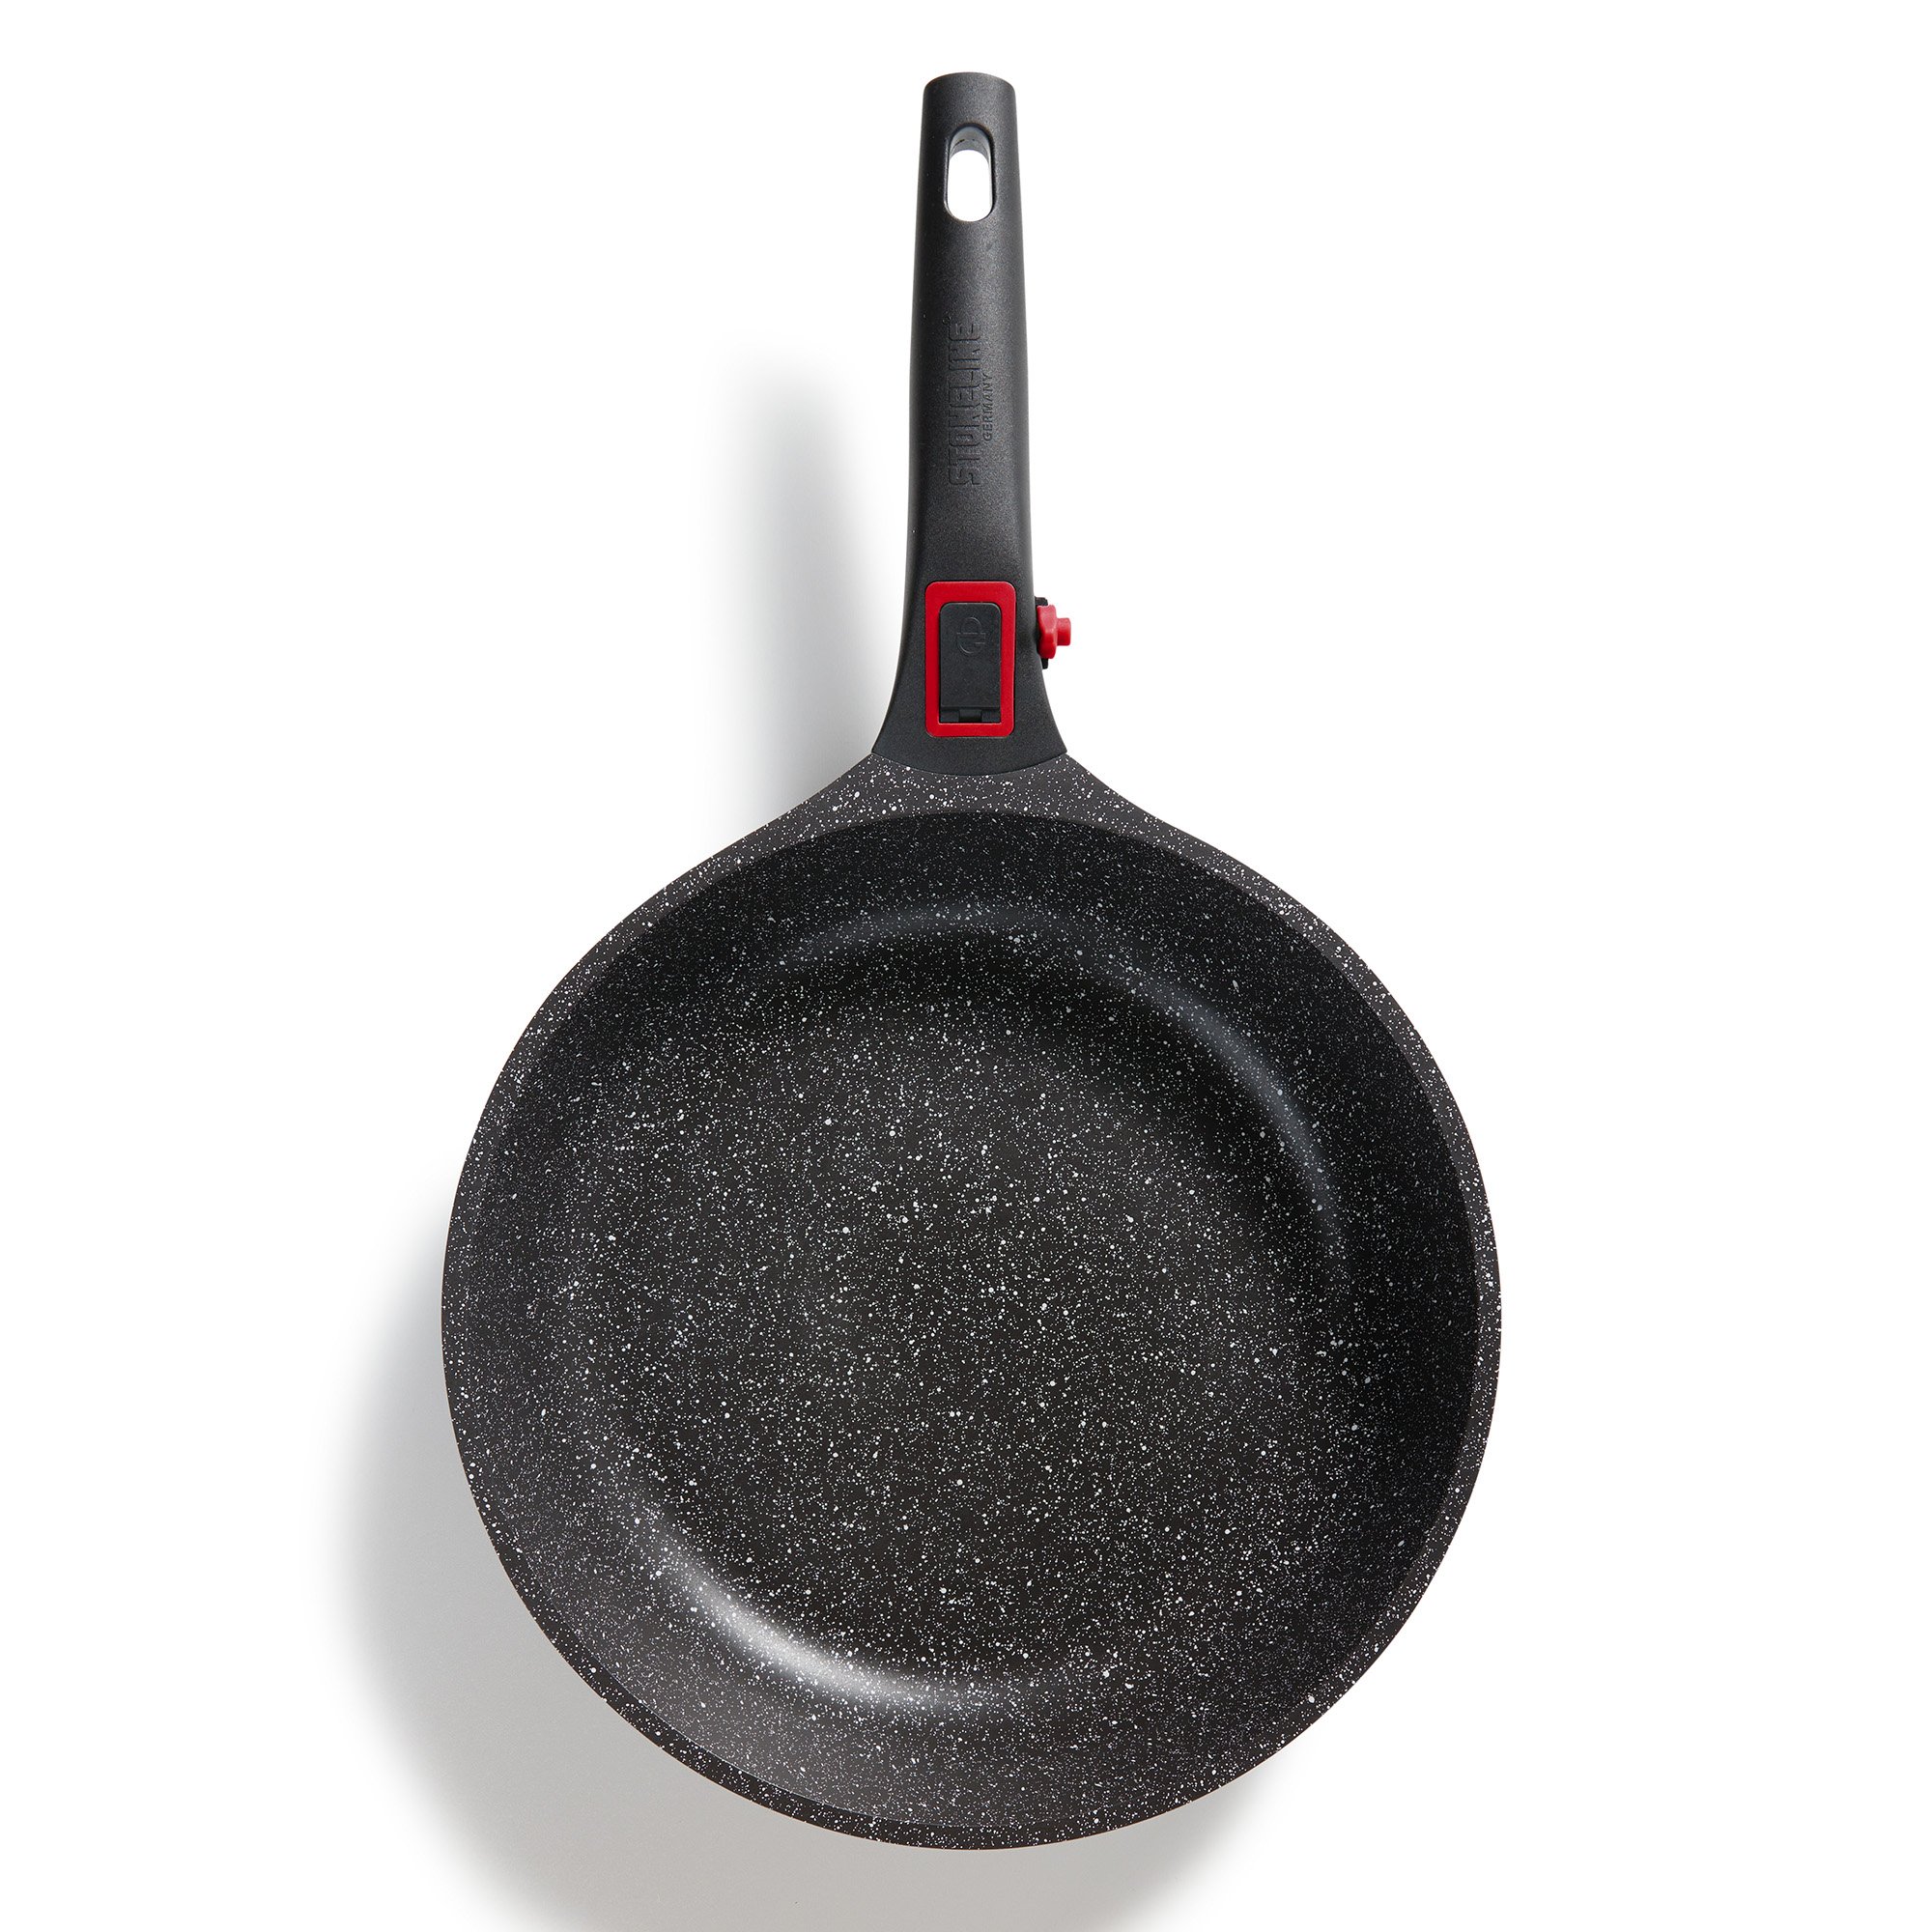 STONELINE® Frying Pan 28 cm, Red, Removable Handle, Non-Stick Pan | Imagination PLUS